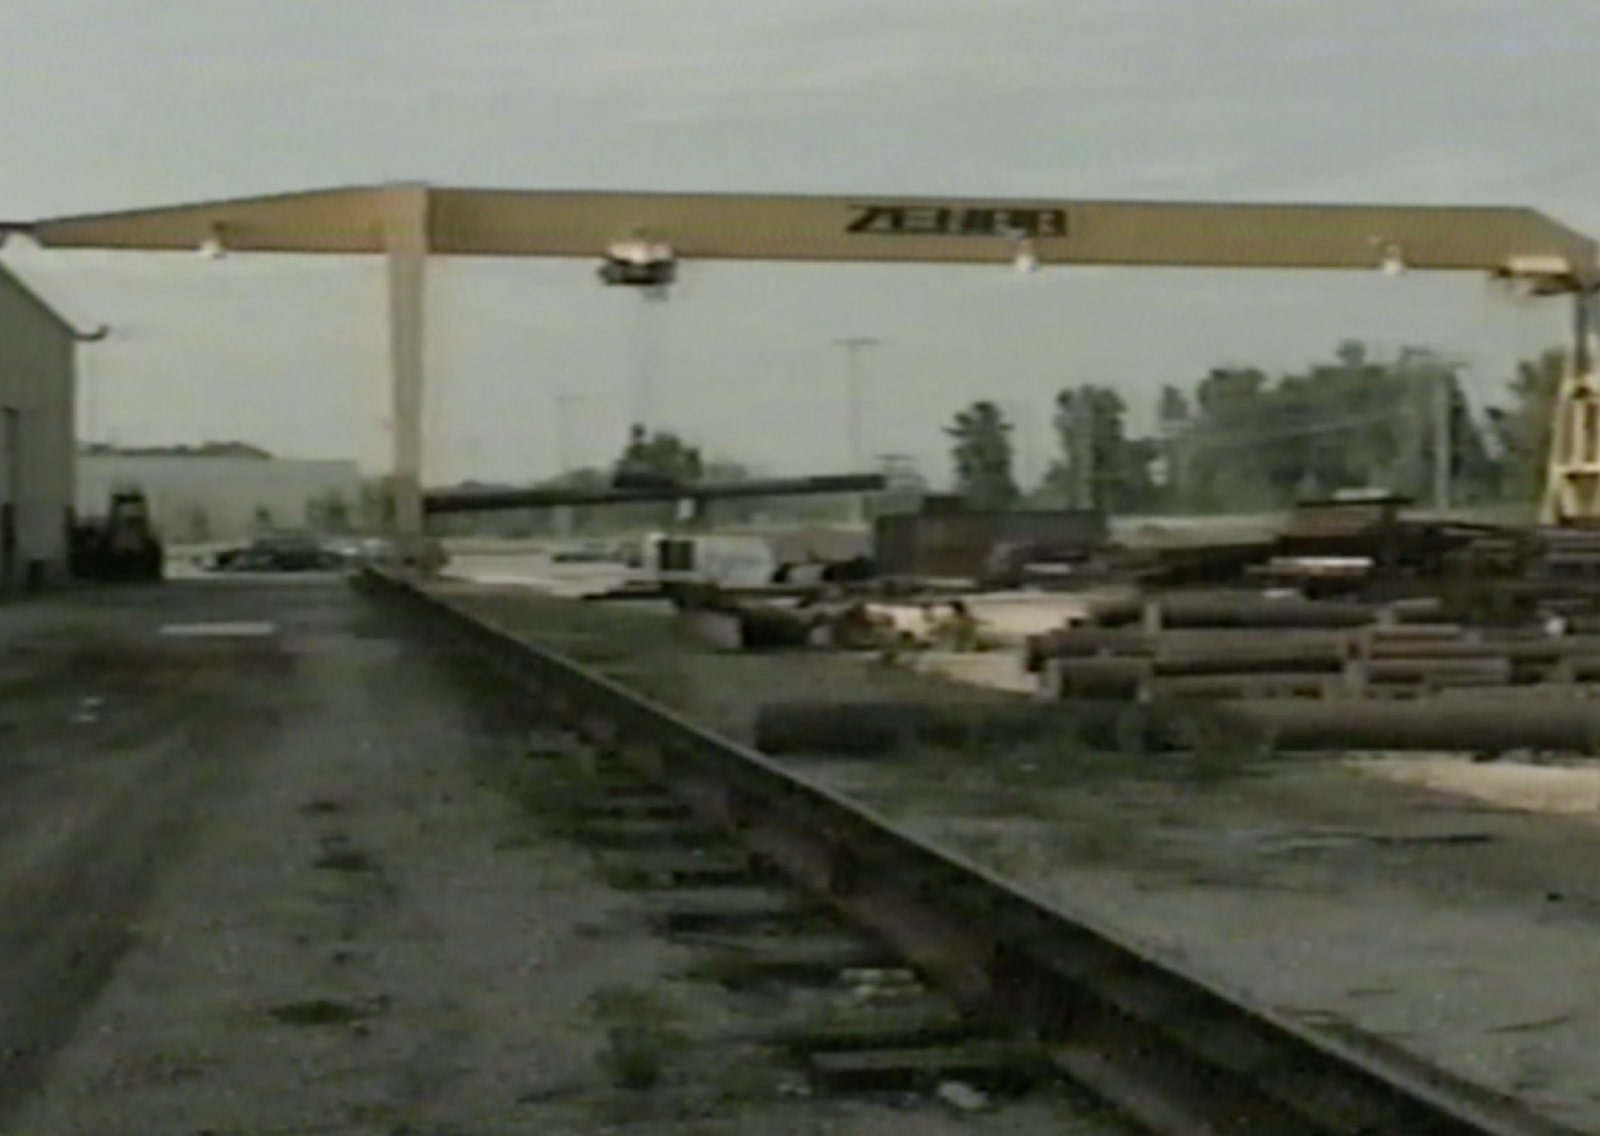 Image from VHS of old Zenar crane